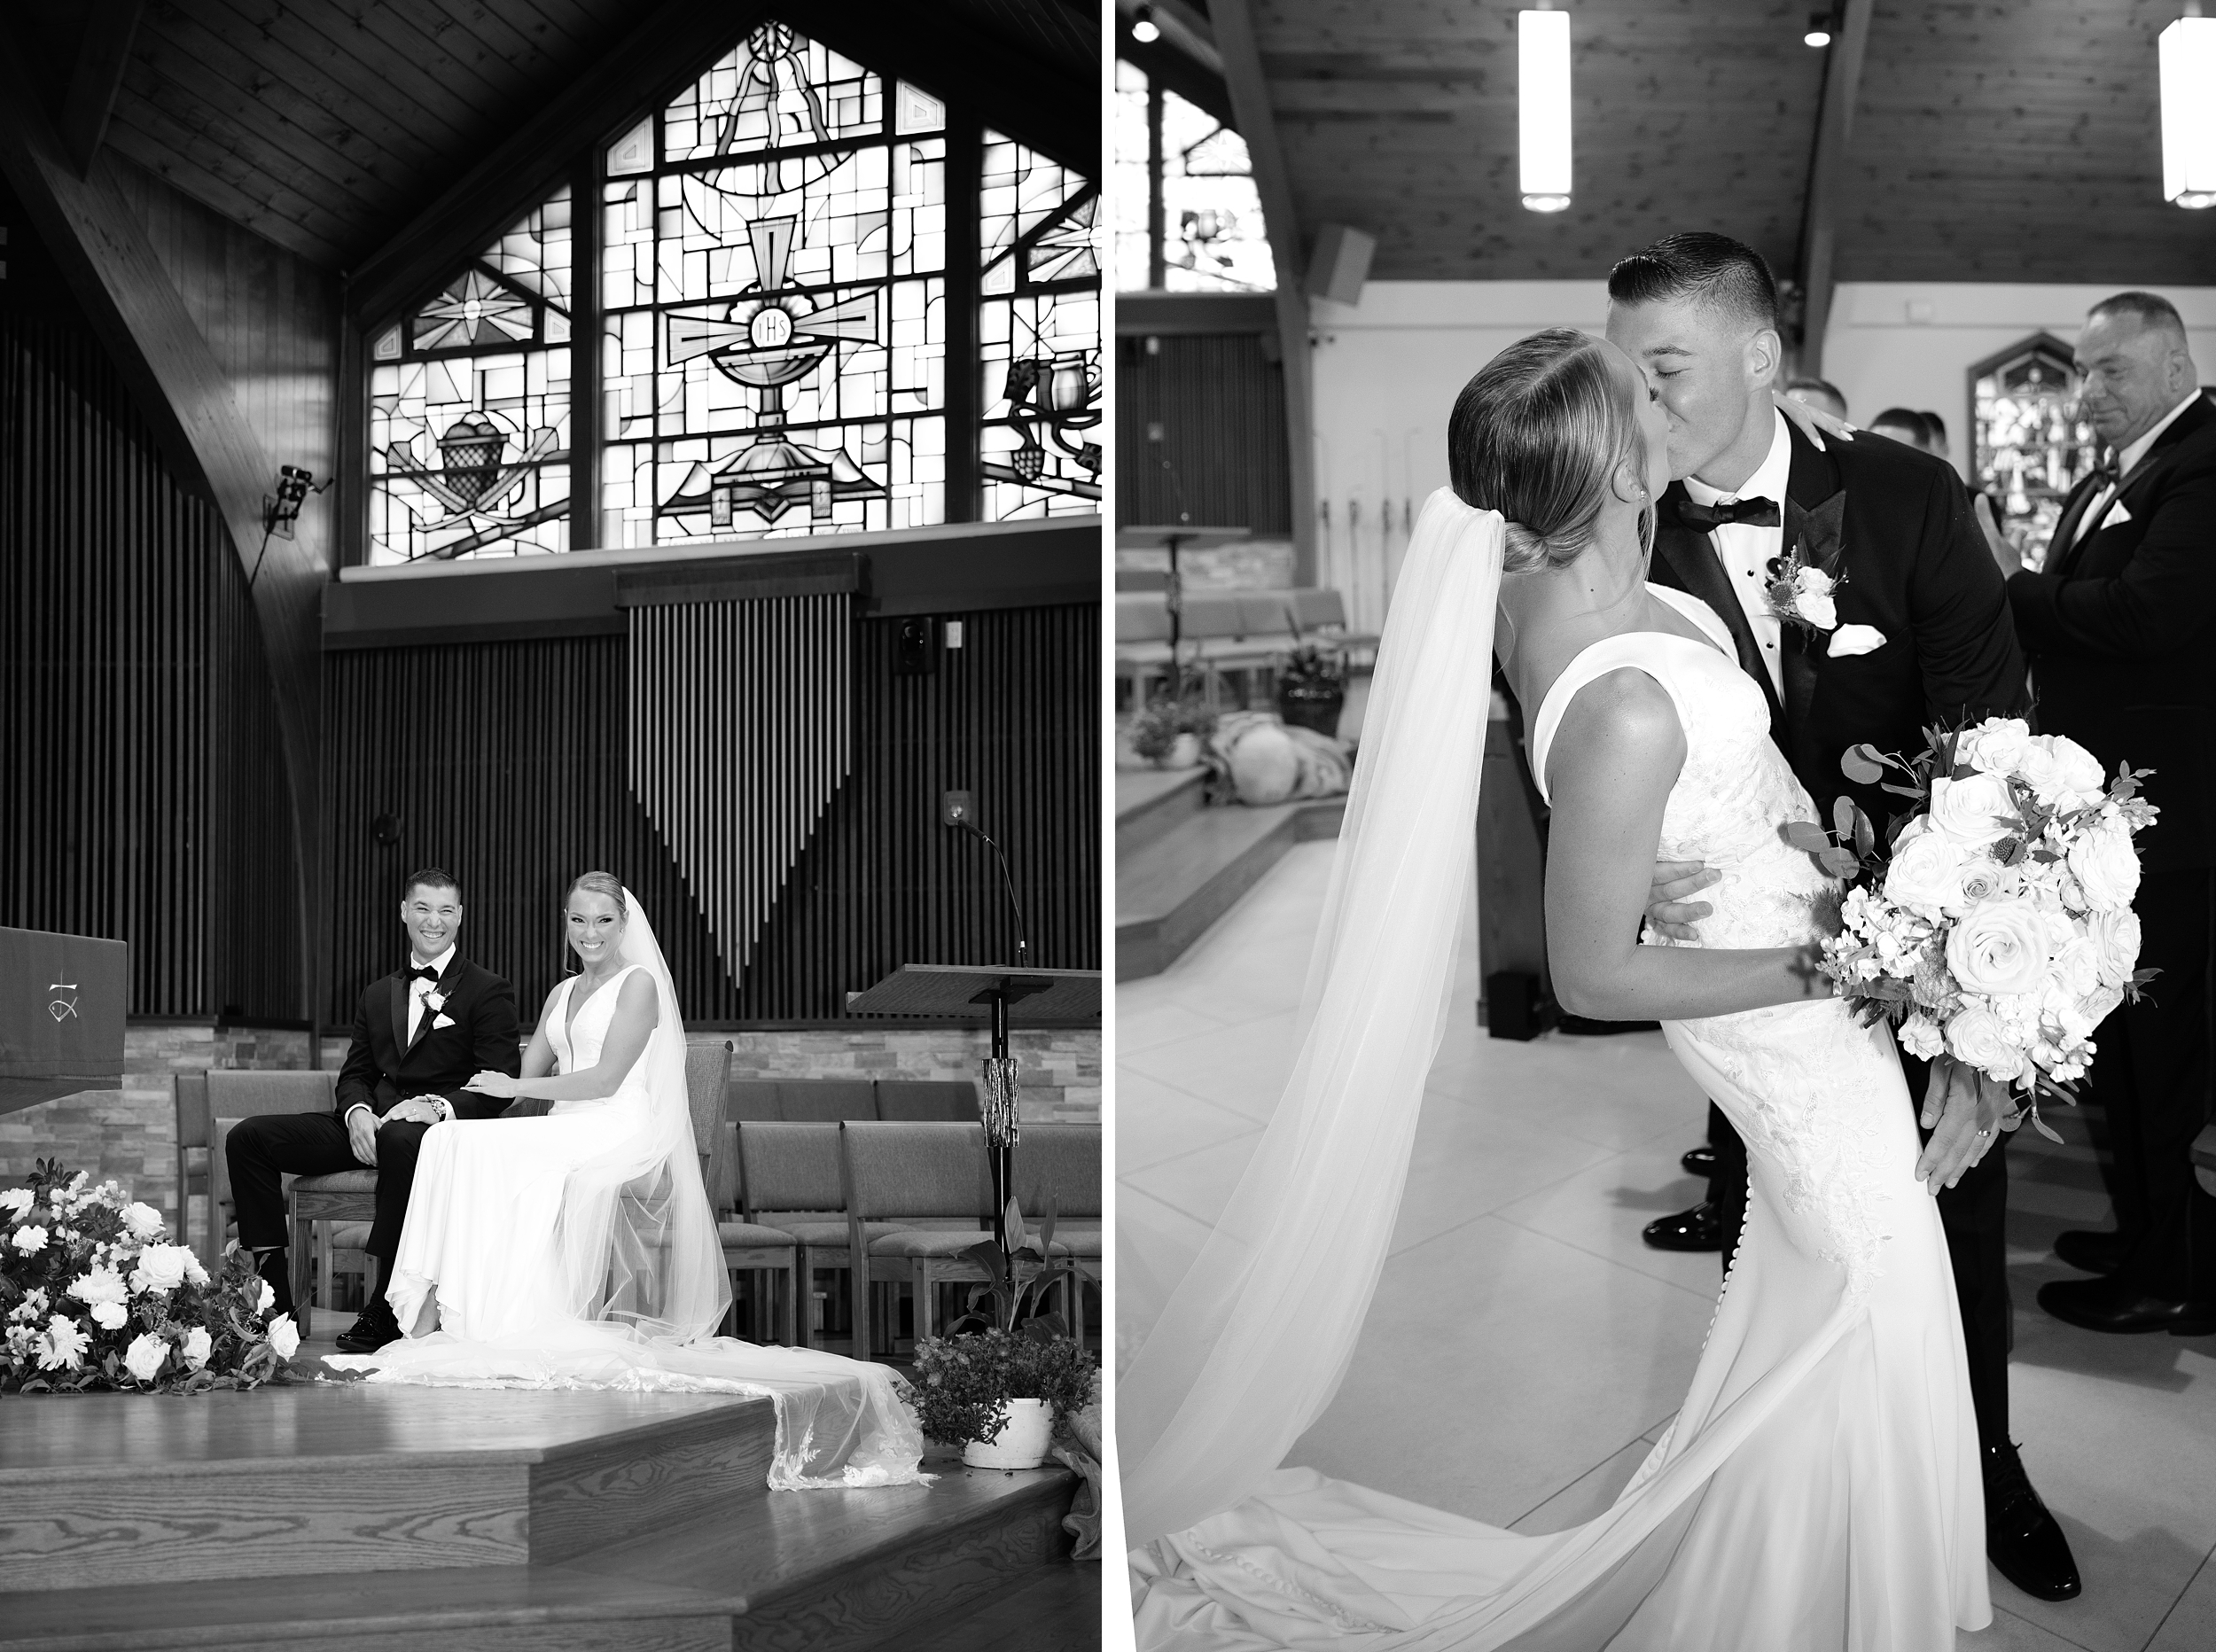 The Ryland Inn Wedding, Whitehouse Station NJ, New Jersey Wedding Photographer 